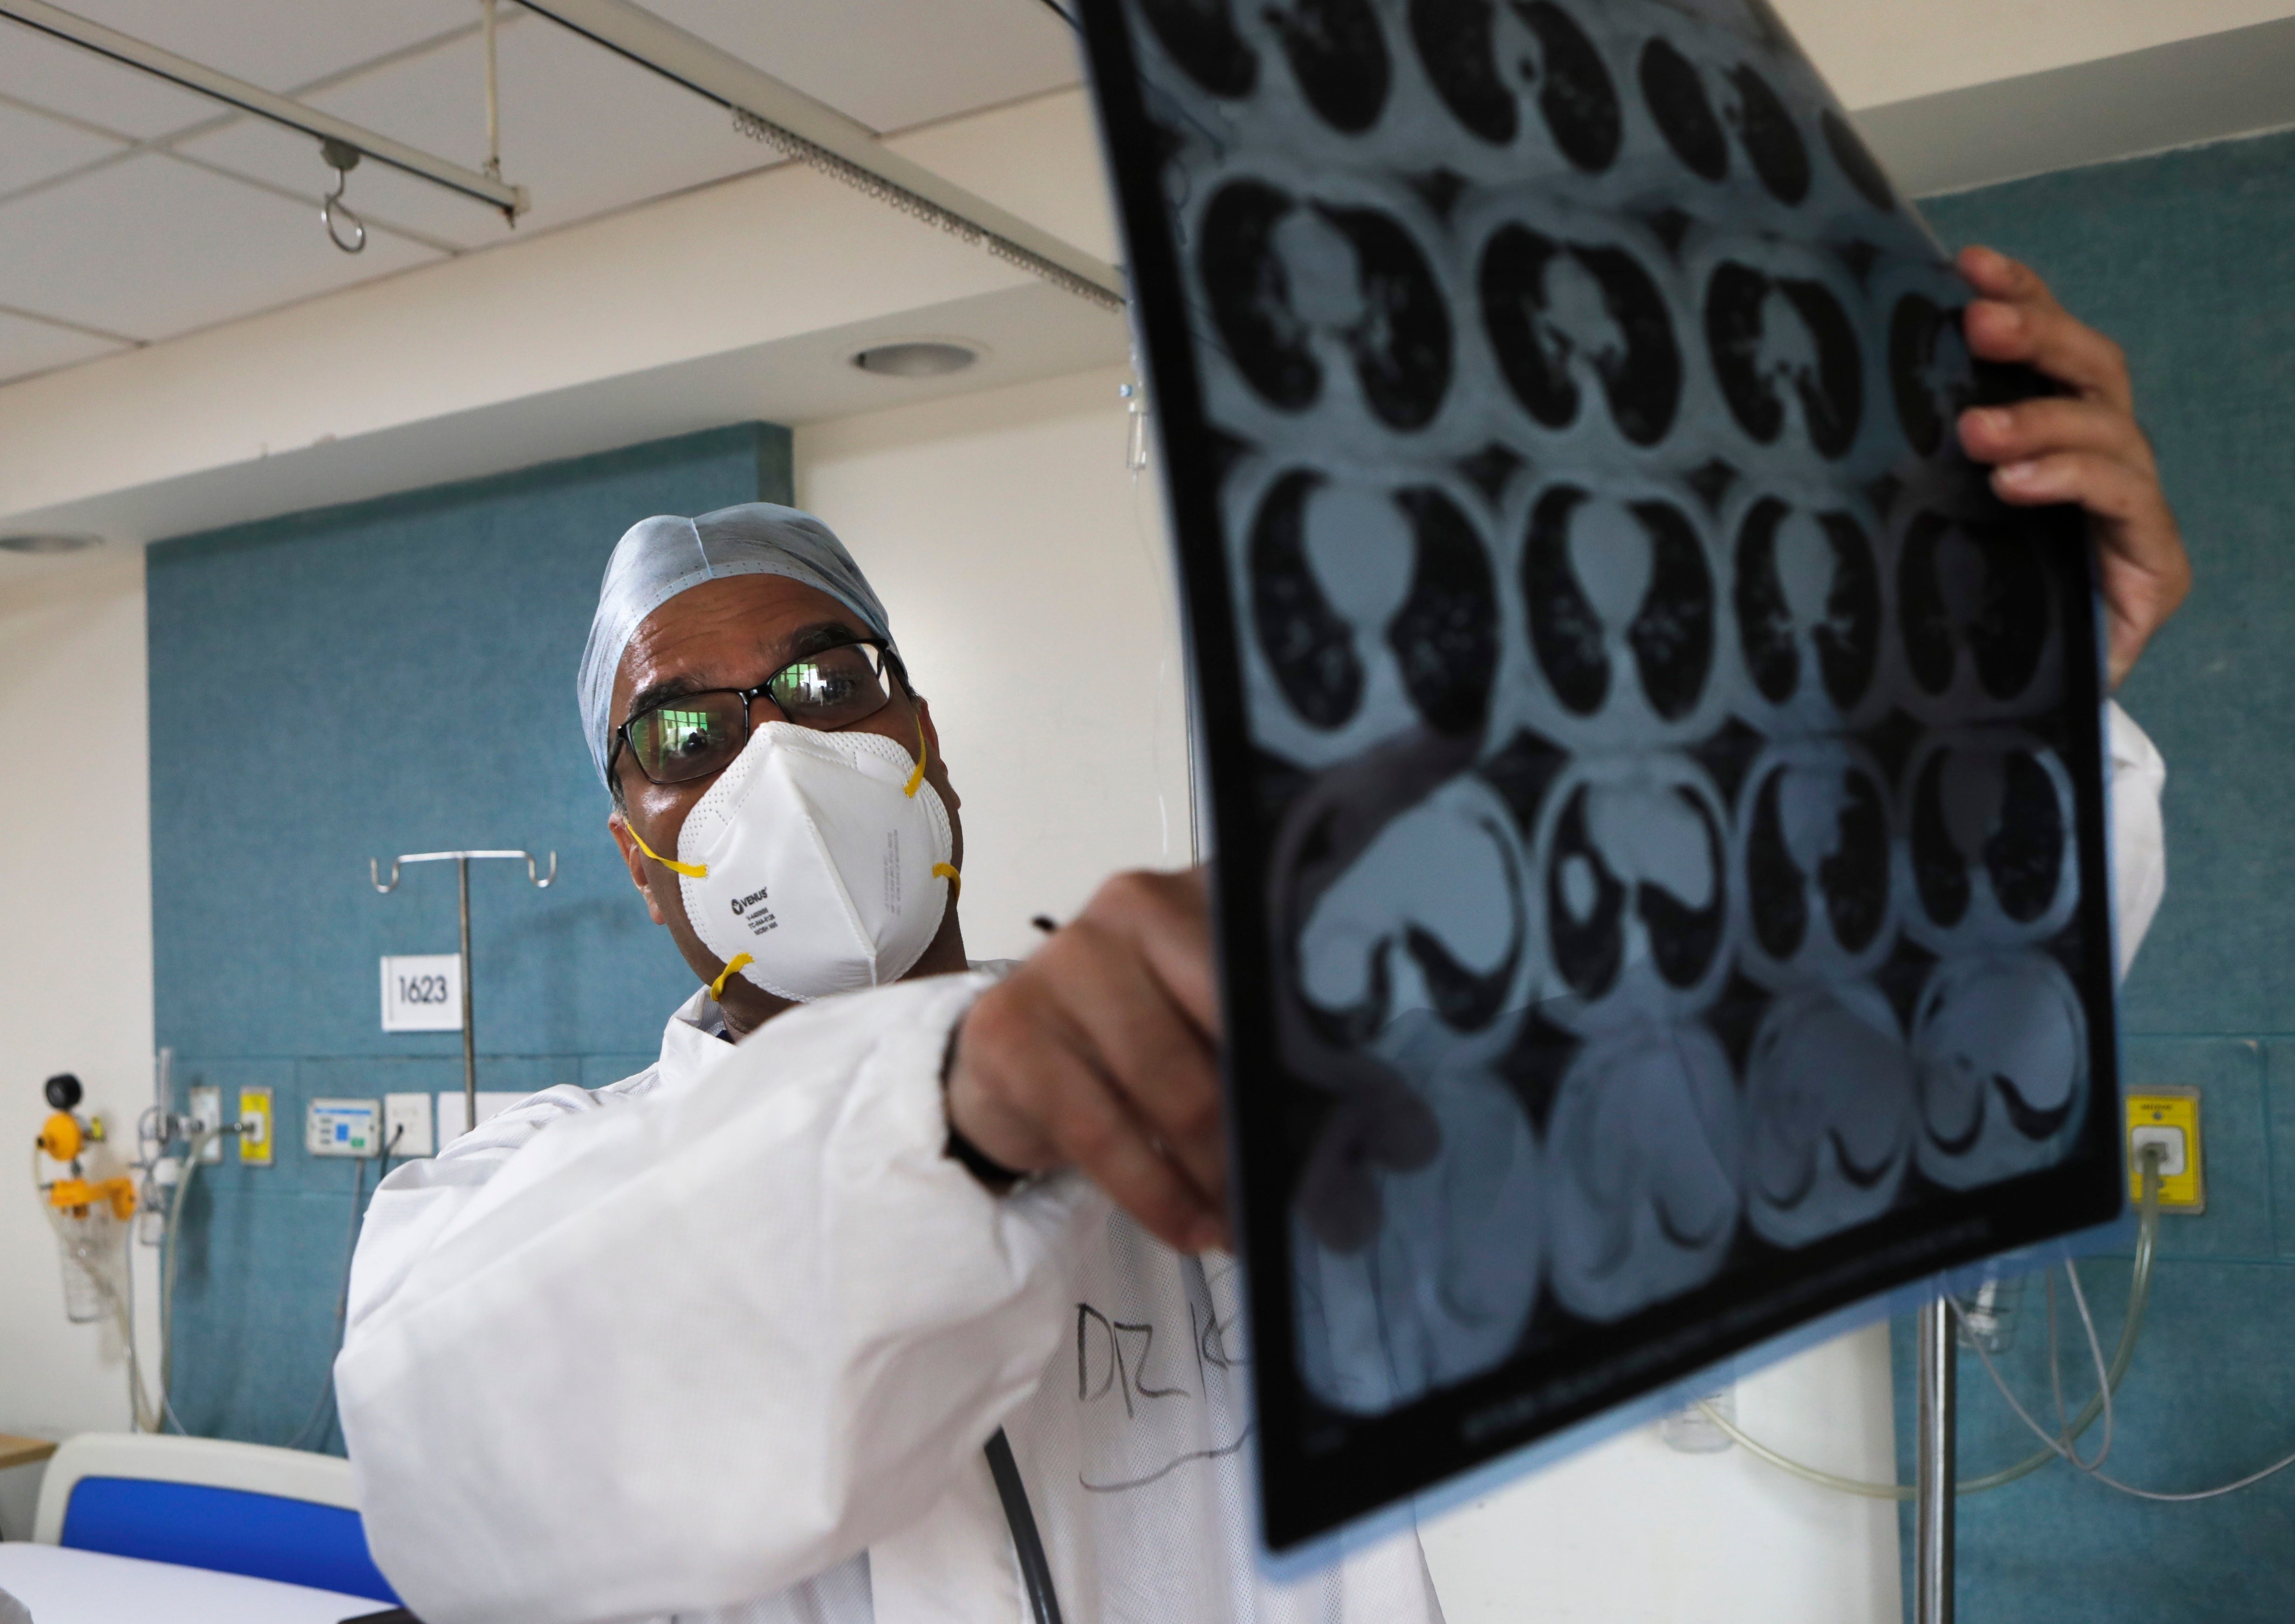 Dr Kedar Toraskar checks the scan report of a Covid-19 patient at the Mumbai Central Wockhardt Hospital in Mumbai, India